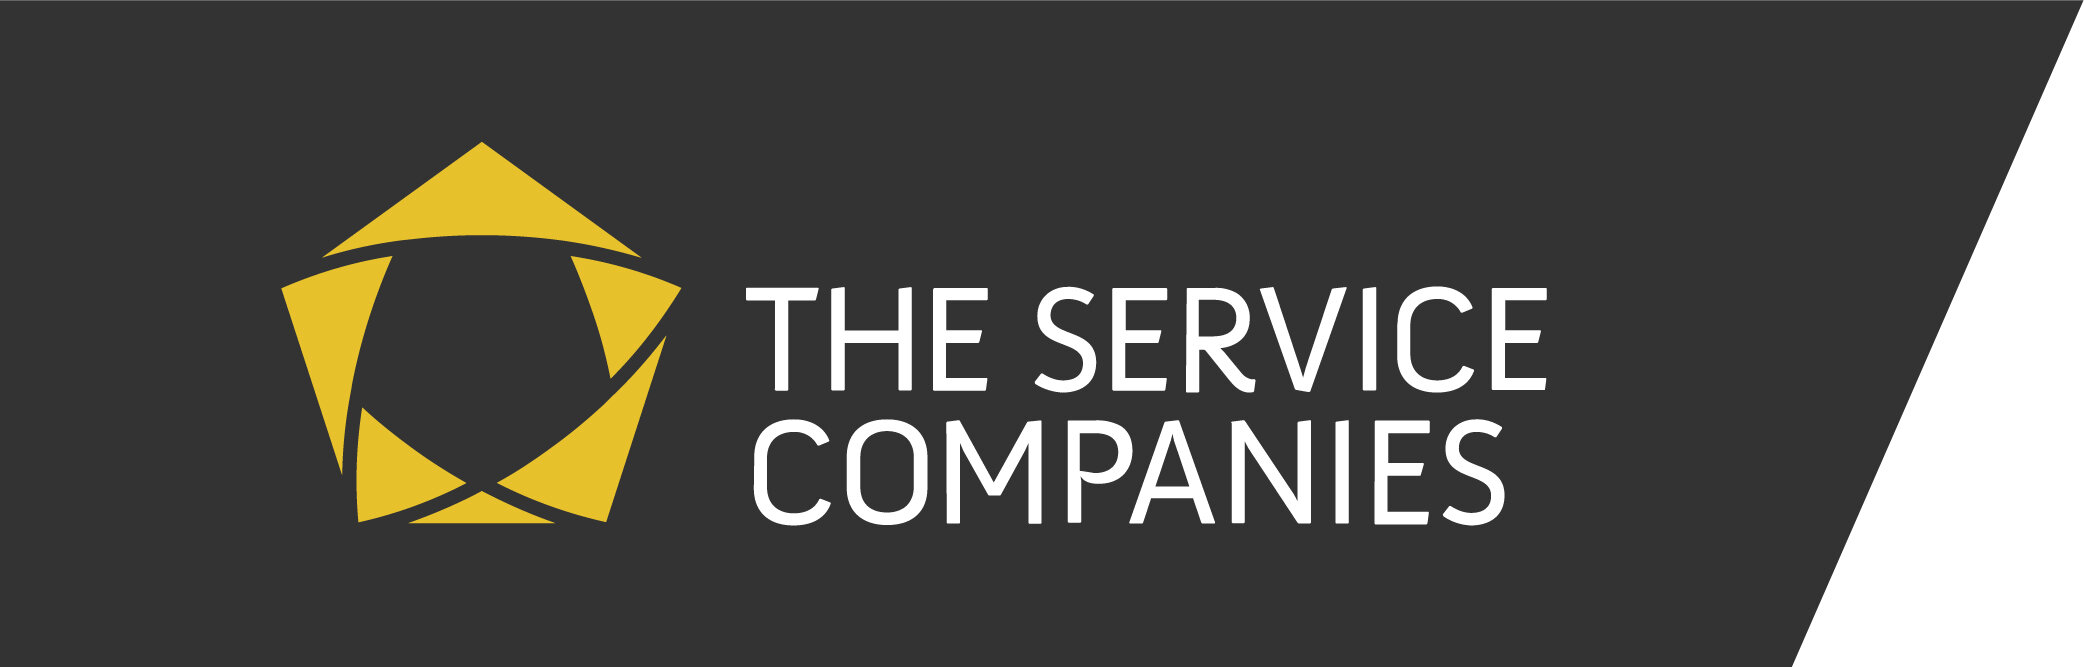 service-companies.jpg